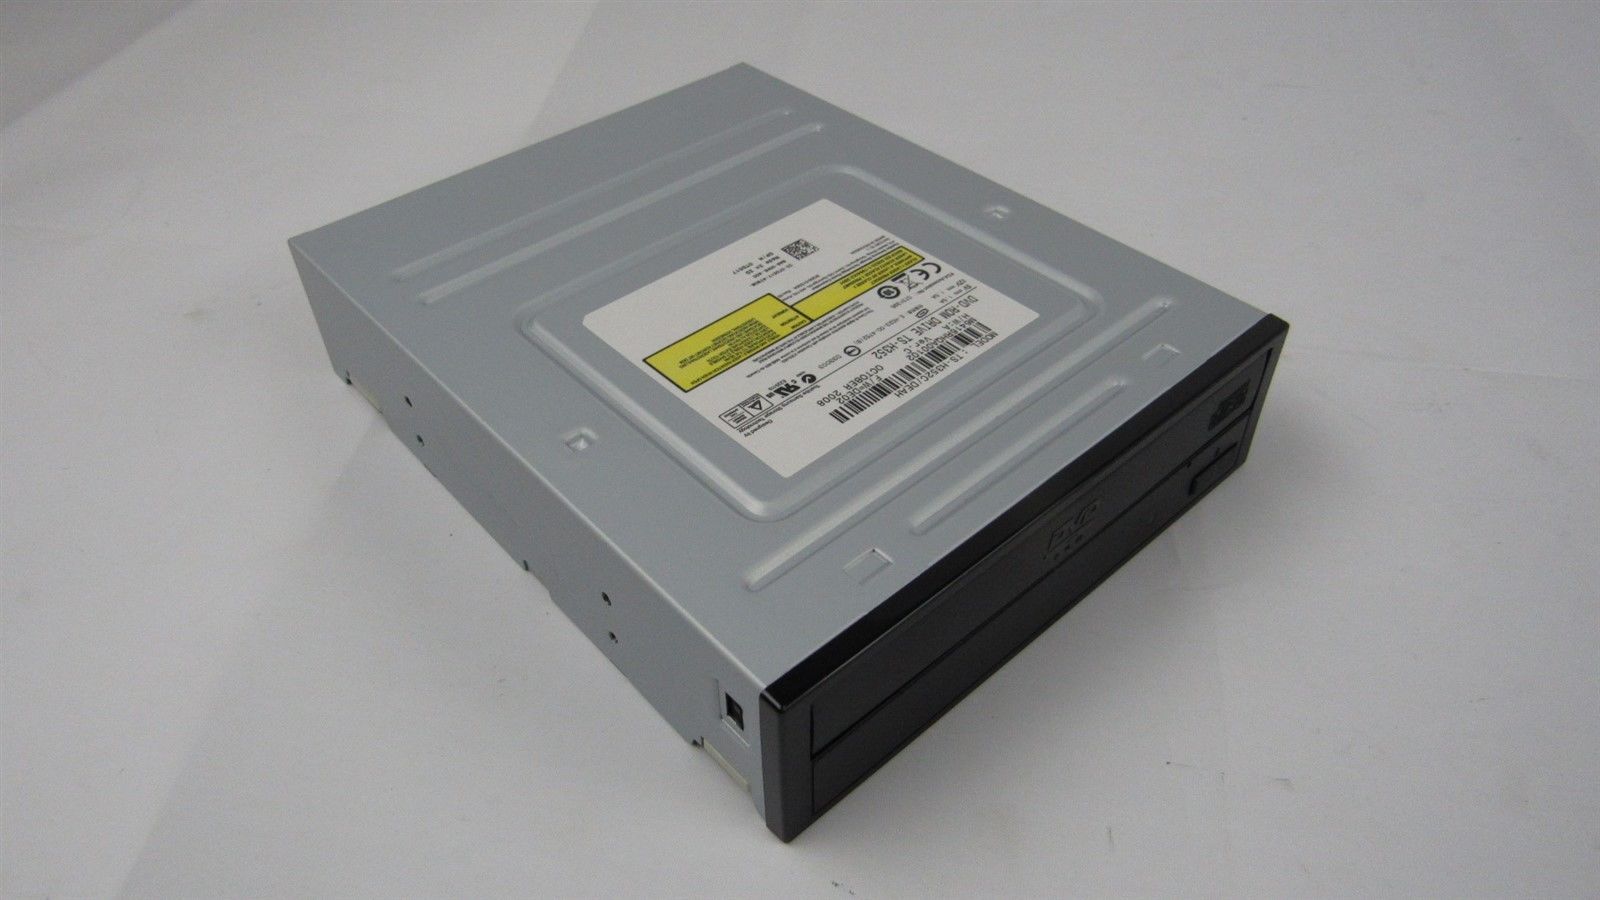 Dell PowerEdge 840 CD-RW DVD-ROM 16X SATA Optical Drive TS-H352 TD517 0TD517